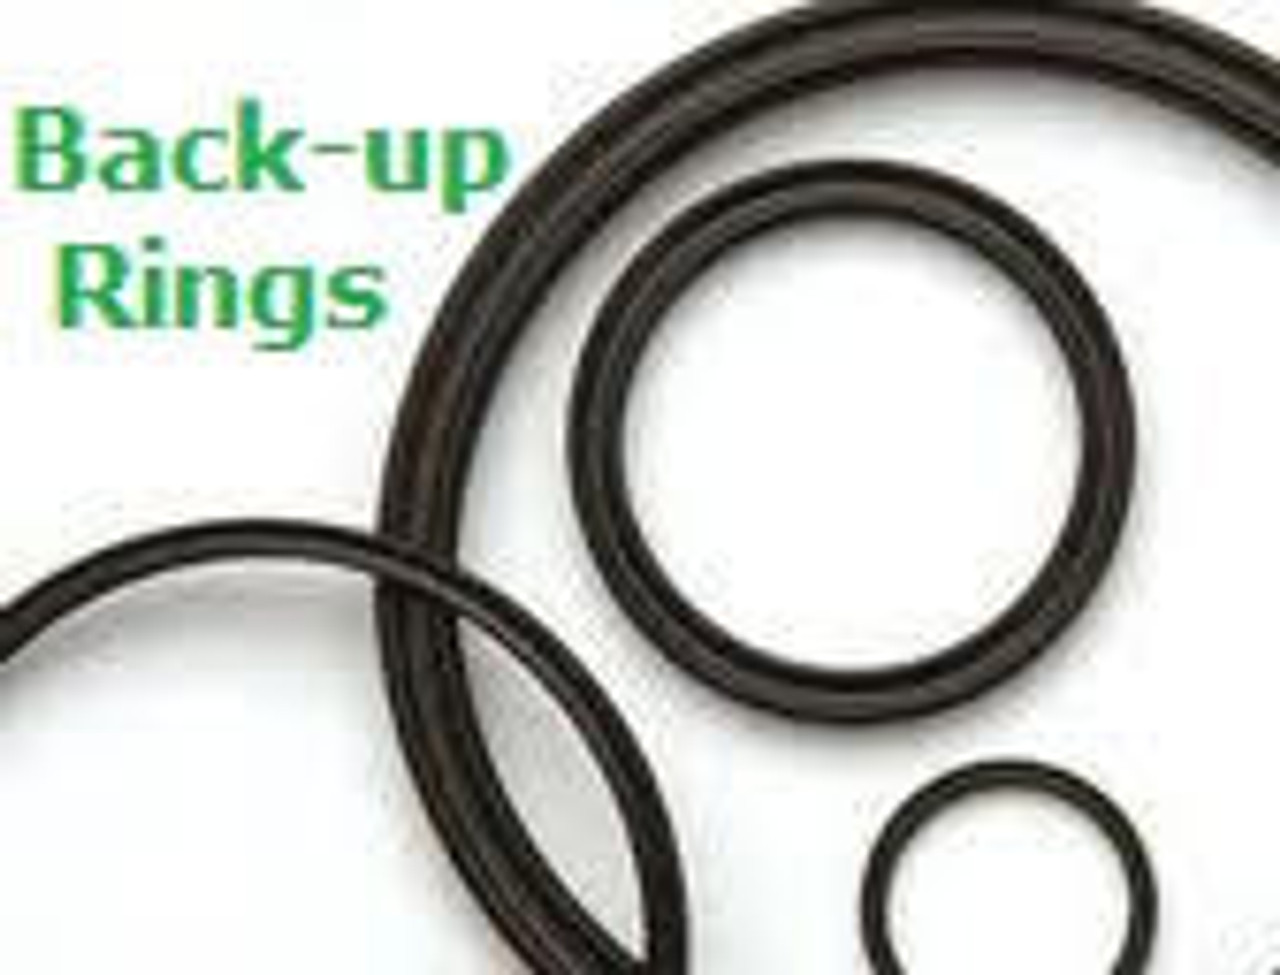 Backup Rings  Buna Size 340 Price for 2 pc